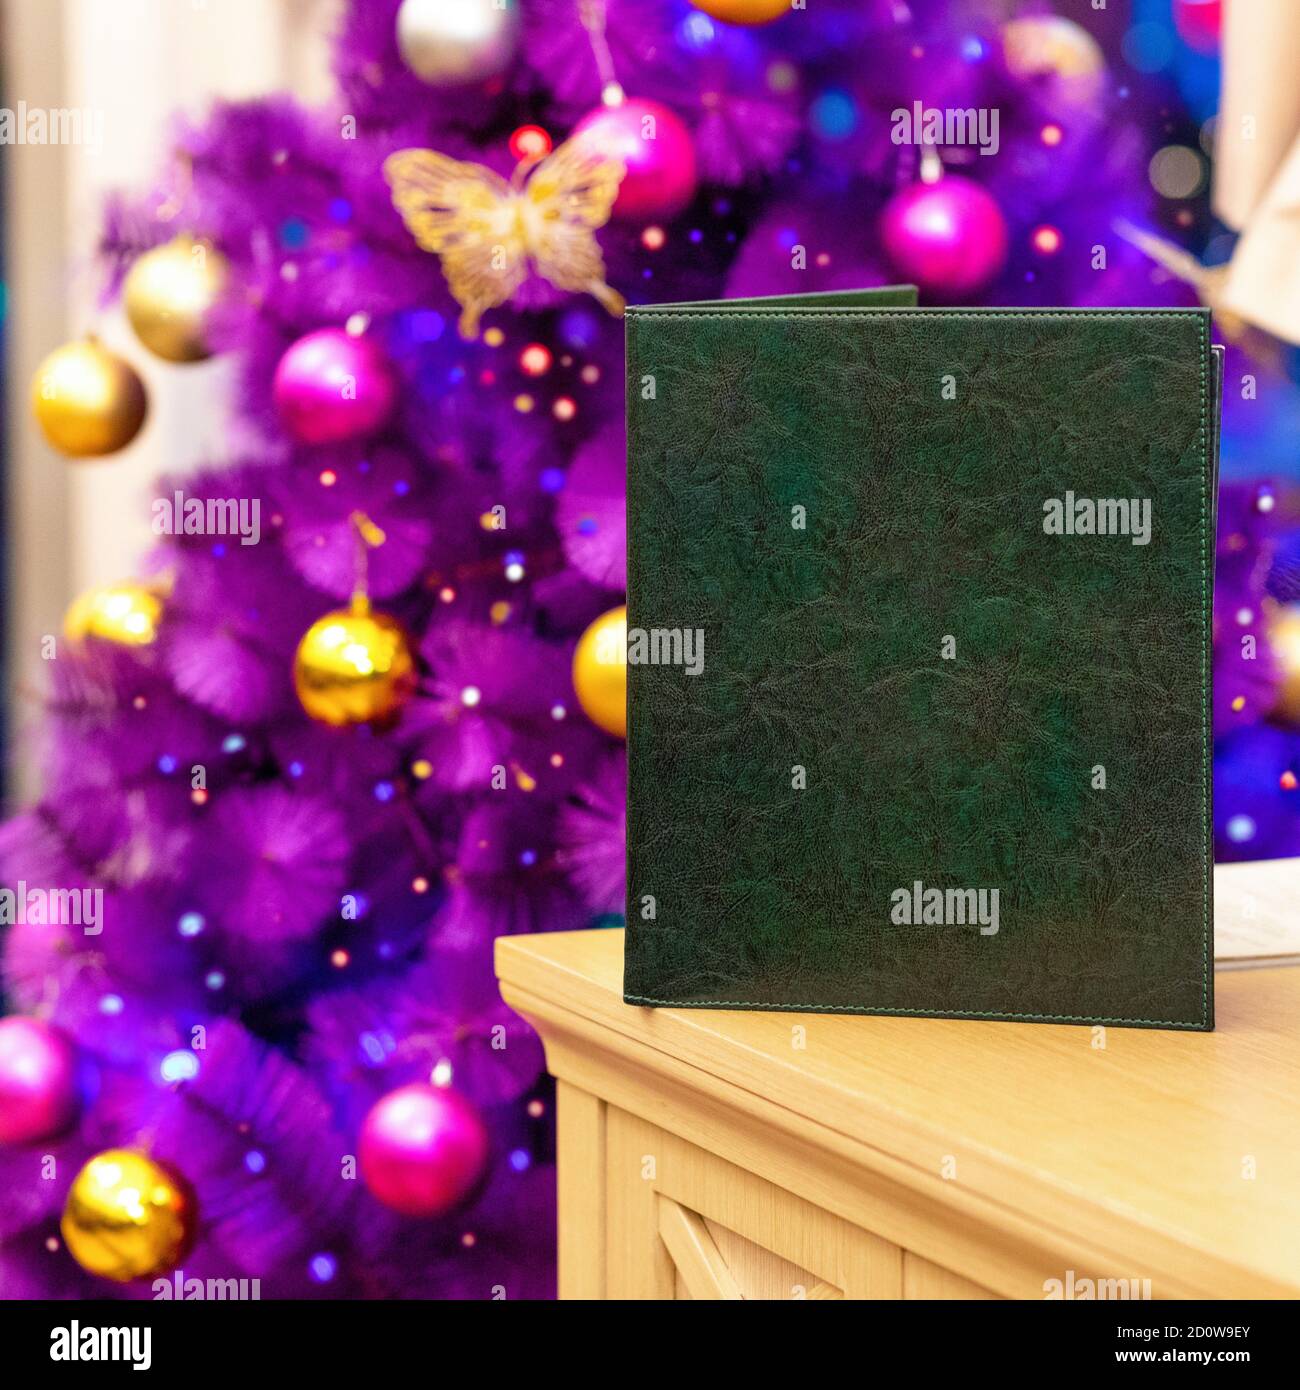 Restaurant menu book with purple Christmas tree close up Stock Photo